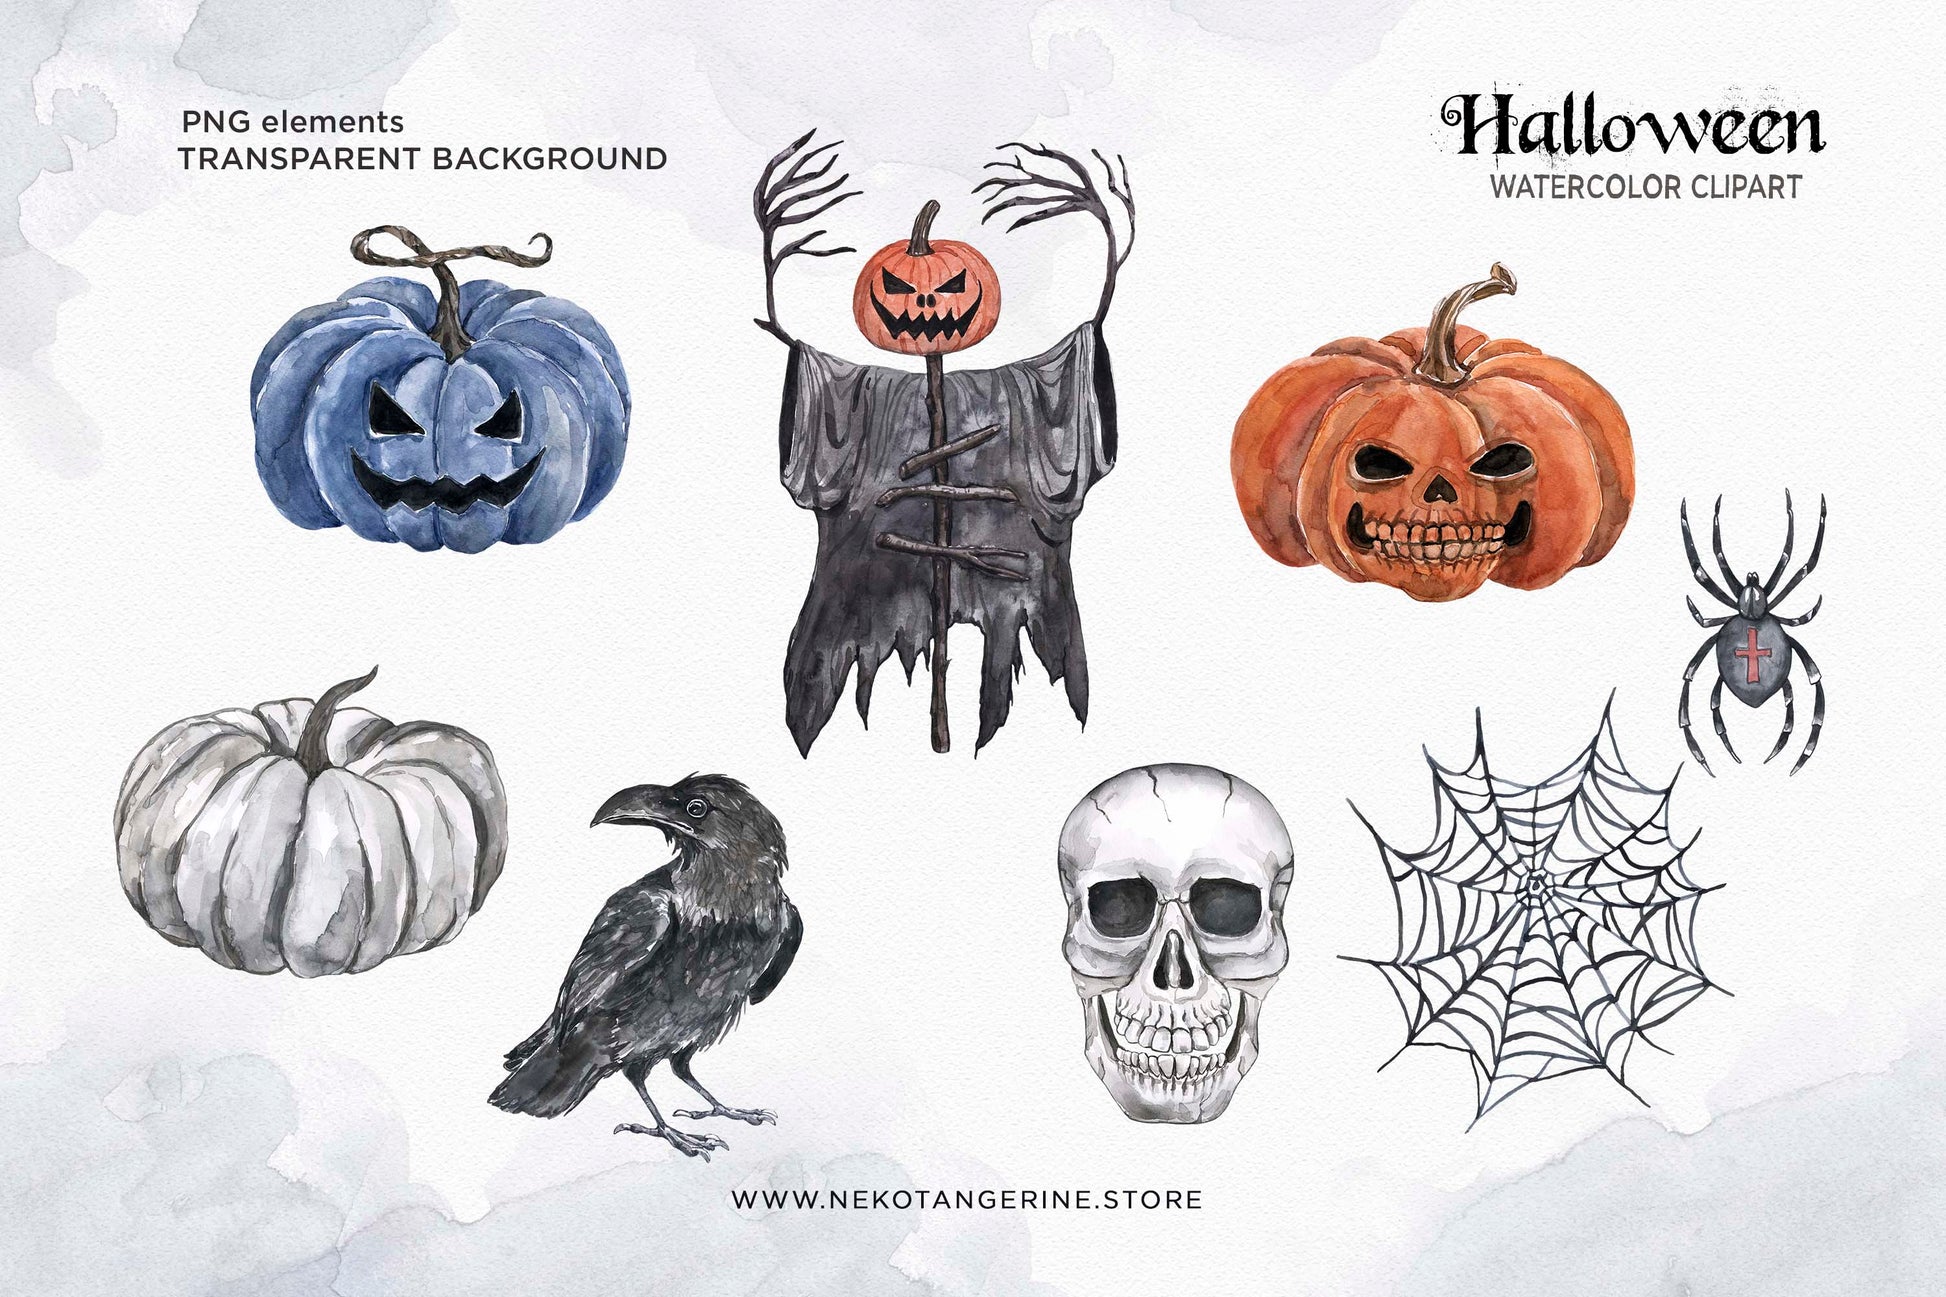 Watercolor Halloween Clipart Vintage Goth Haunted House Ghost Skeleton Skull Bat Jack O Lantern